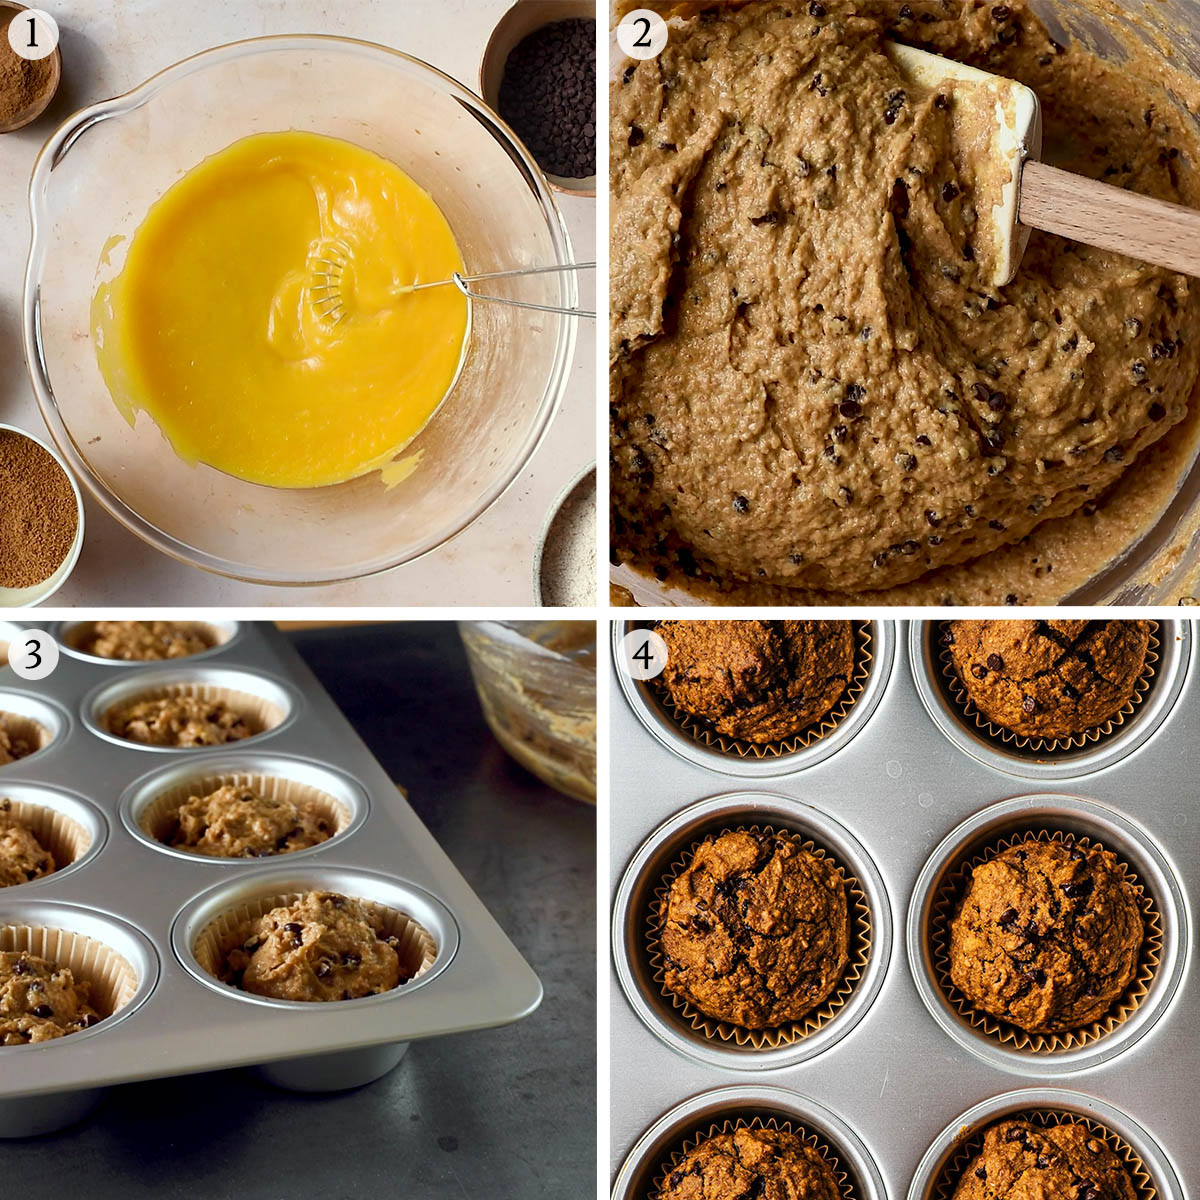 Pumpkin chocolate chip muffins steps 1 to 4.